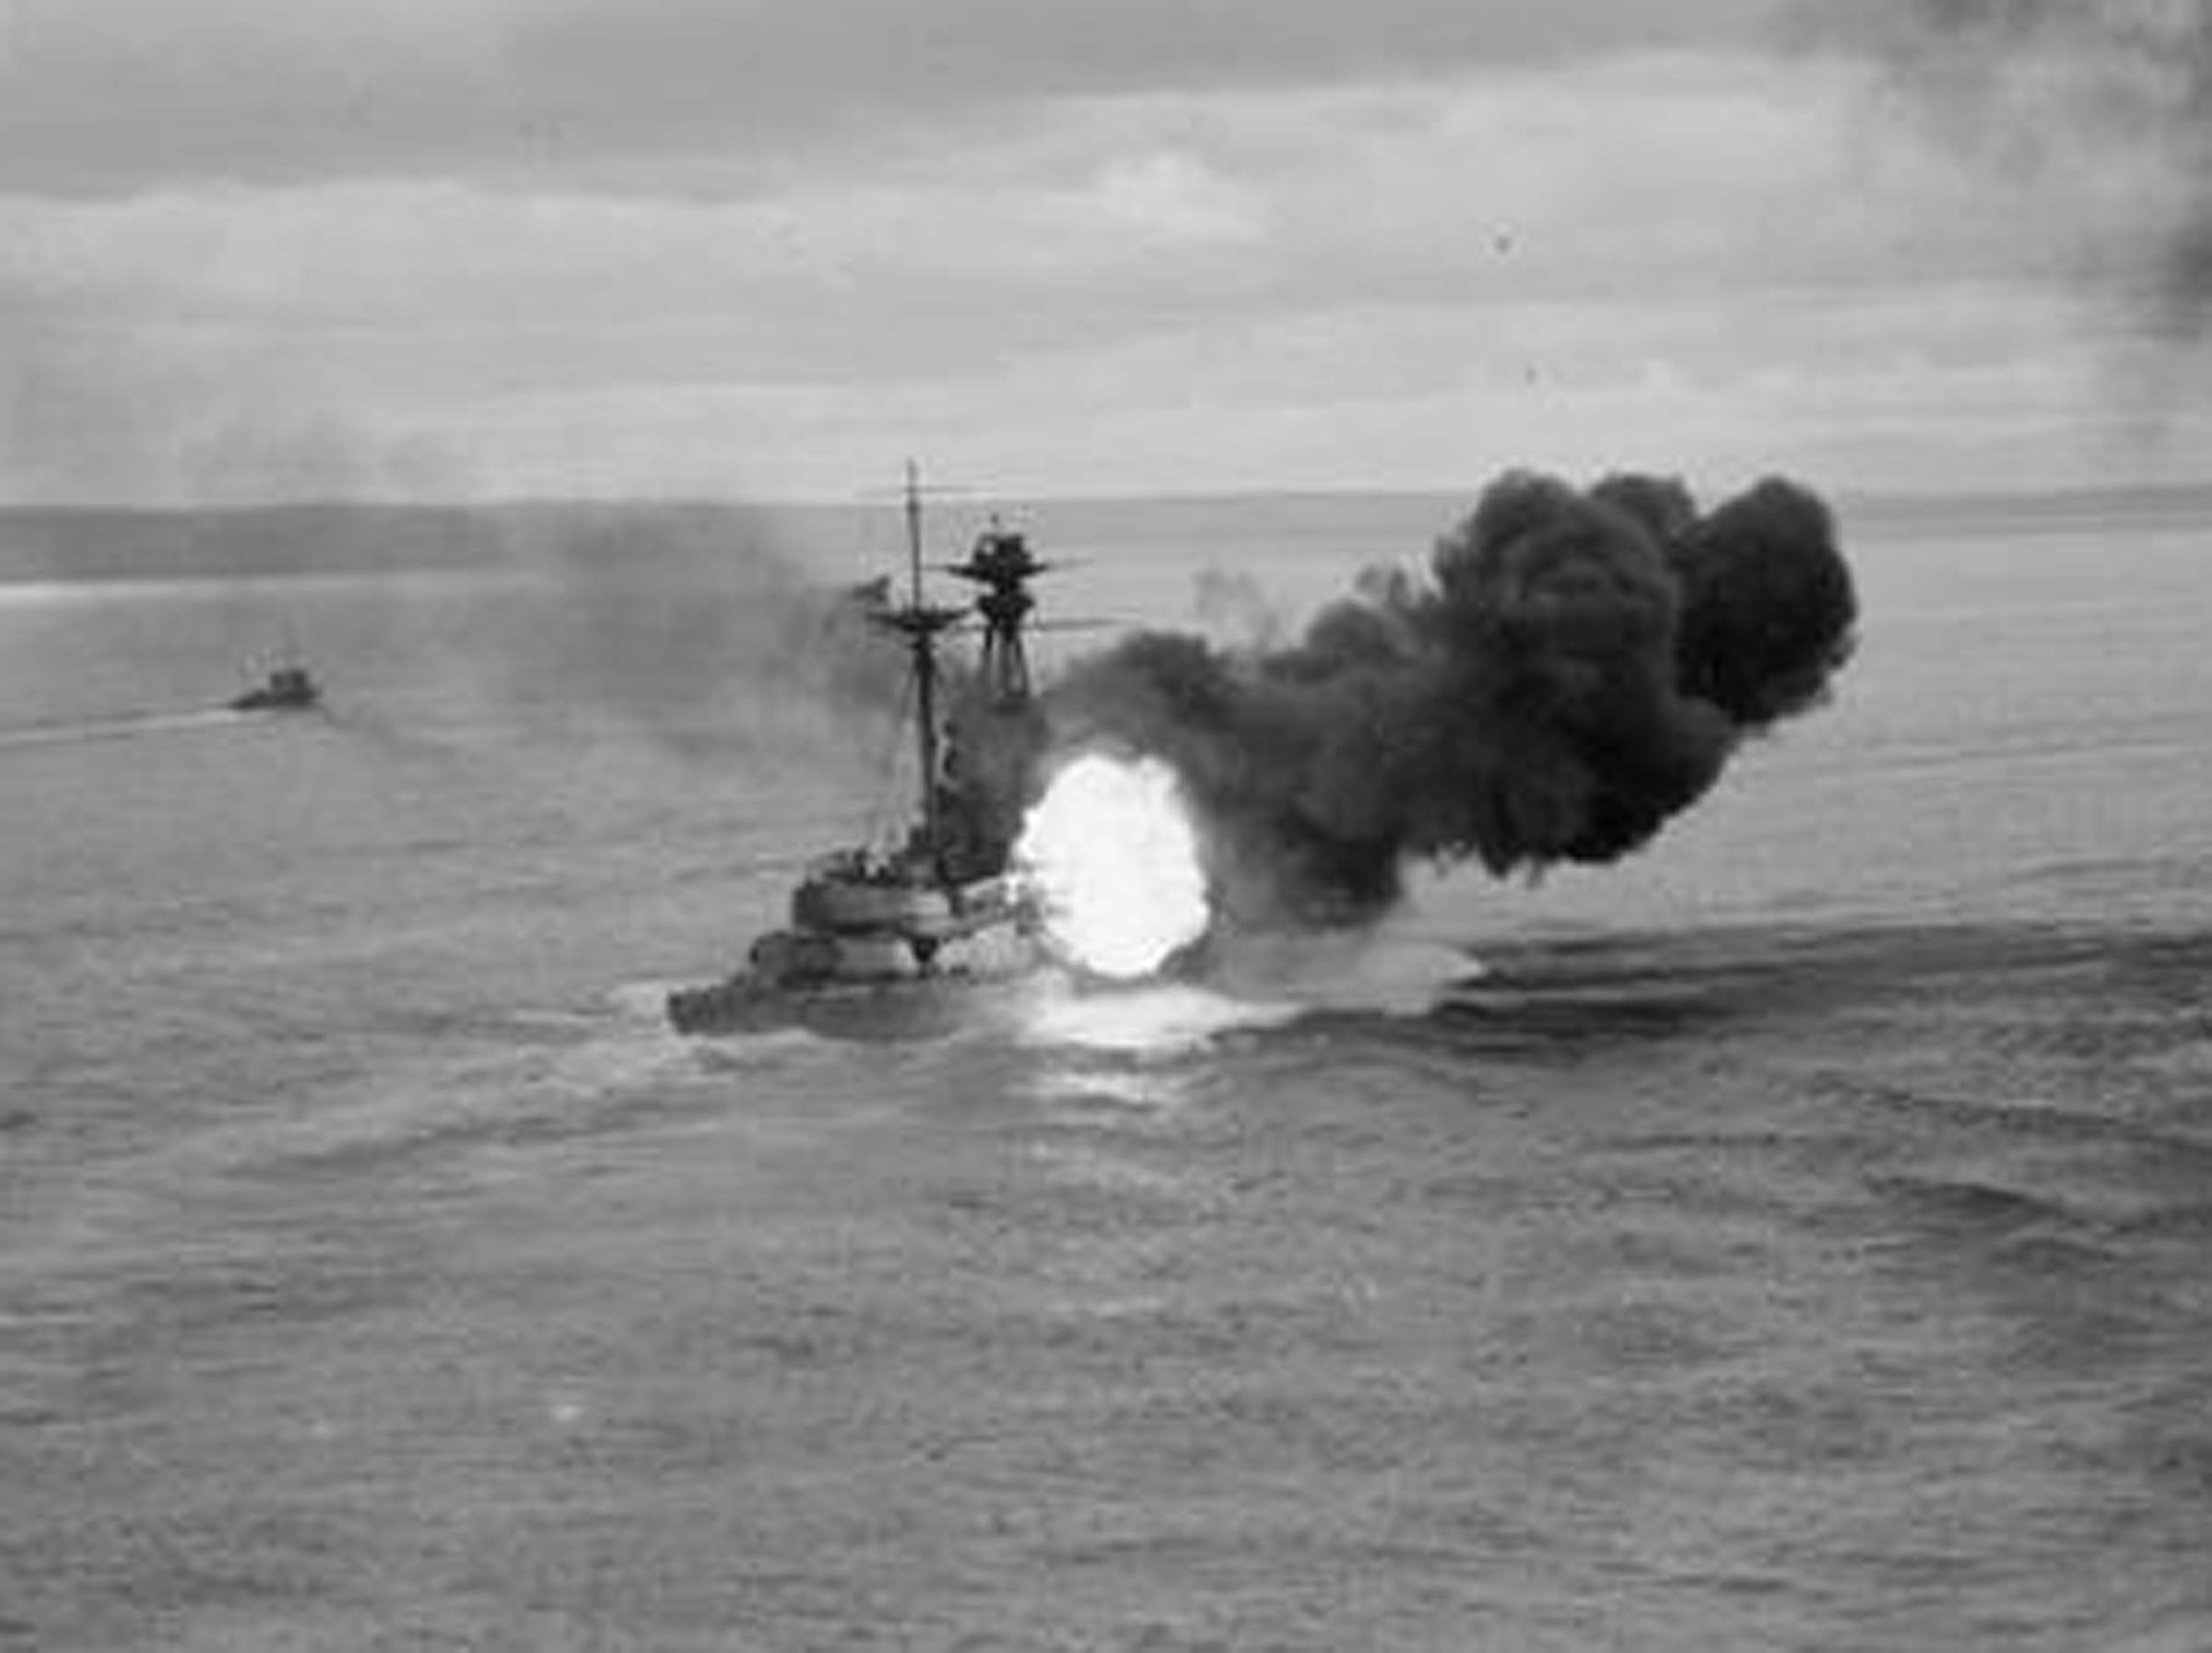 HMS Resolution fires her guns © IWM (Q 18140)